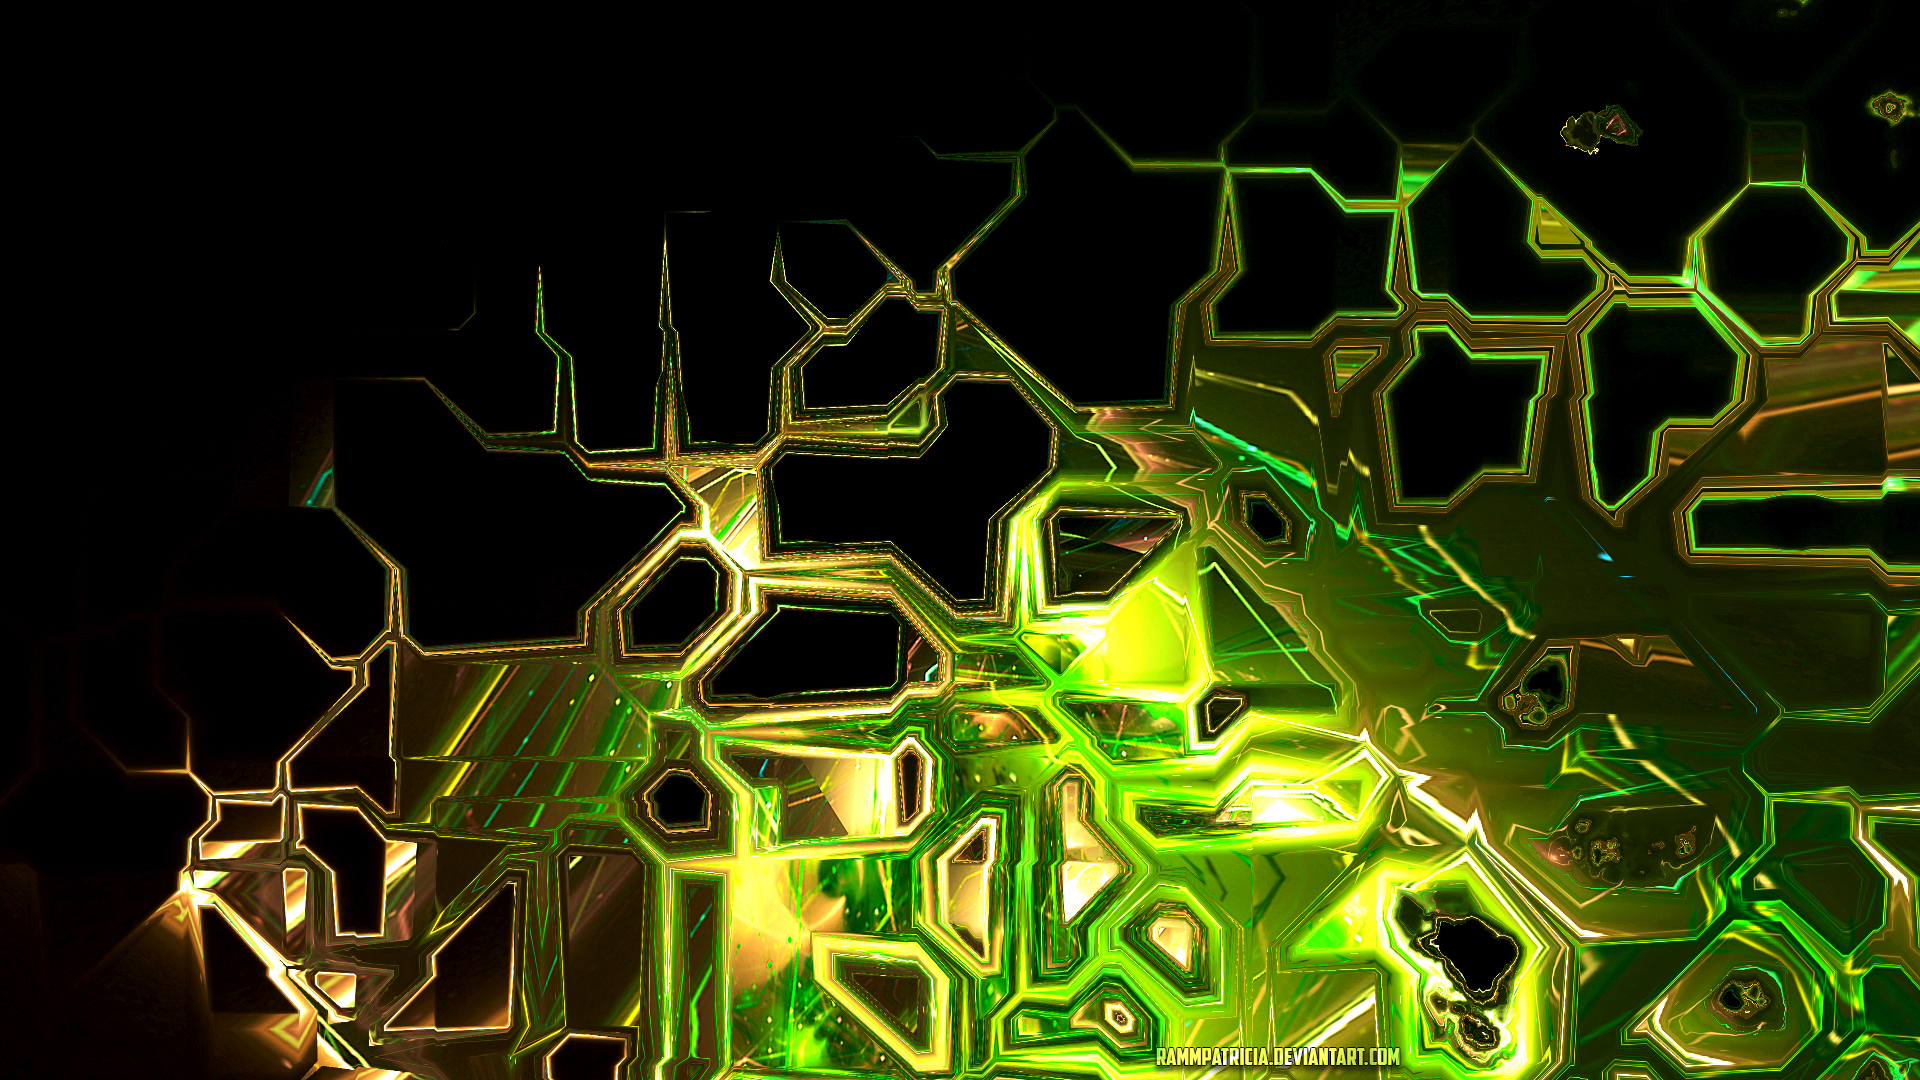 General 1920x1080 RammPatricia abstract digital art green watermarked